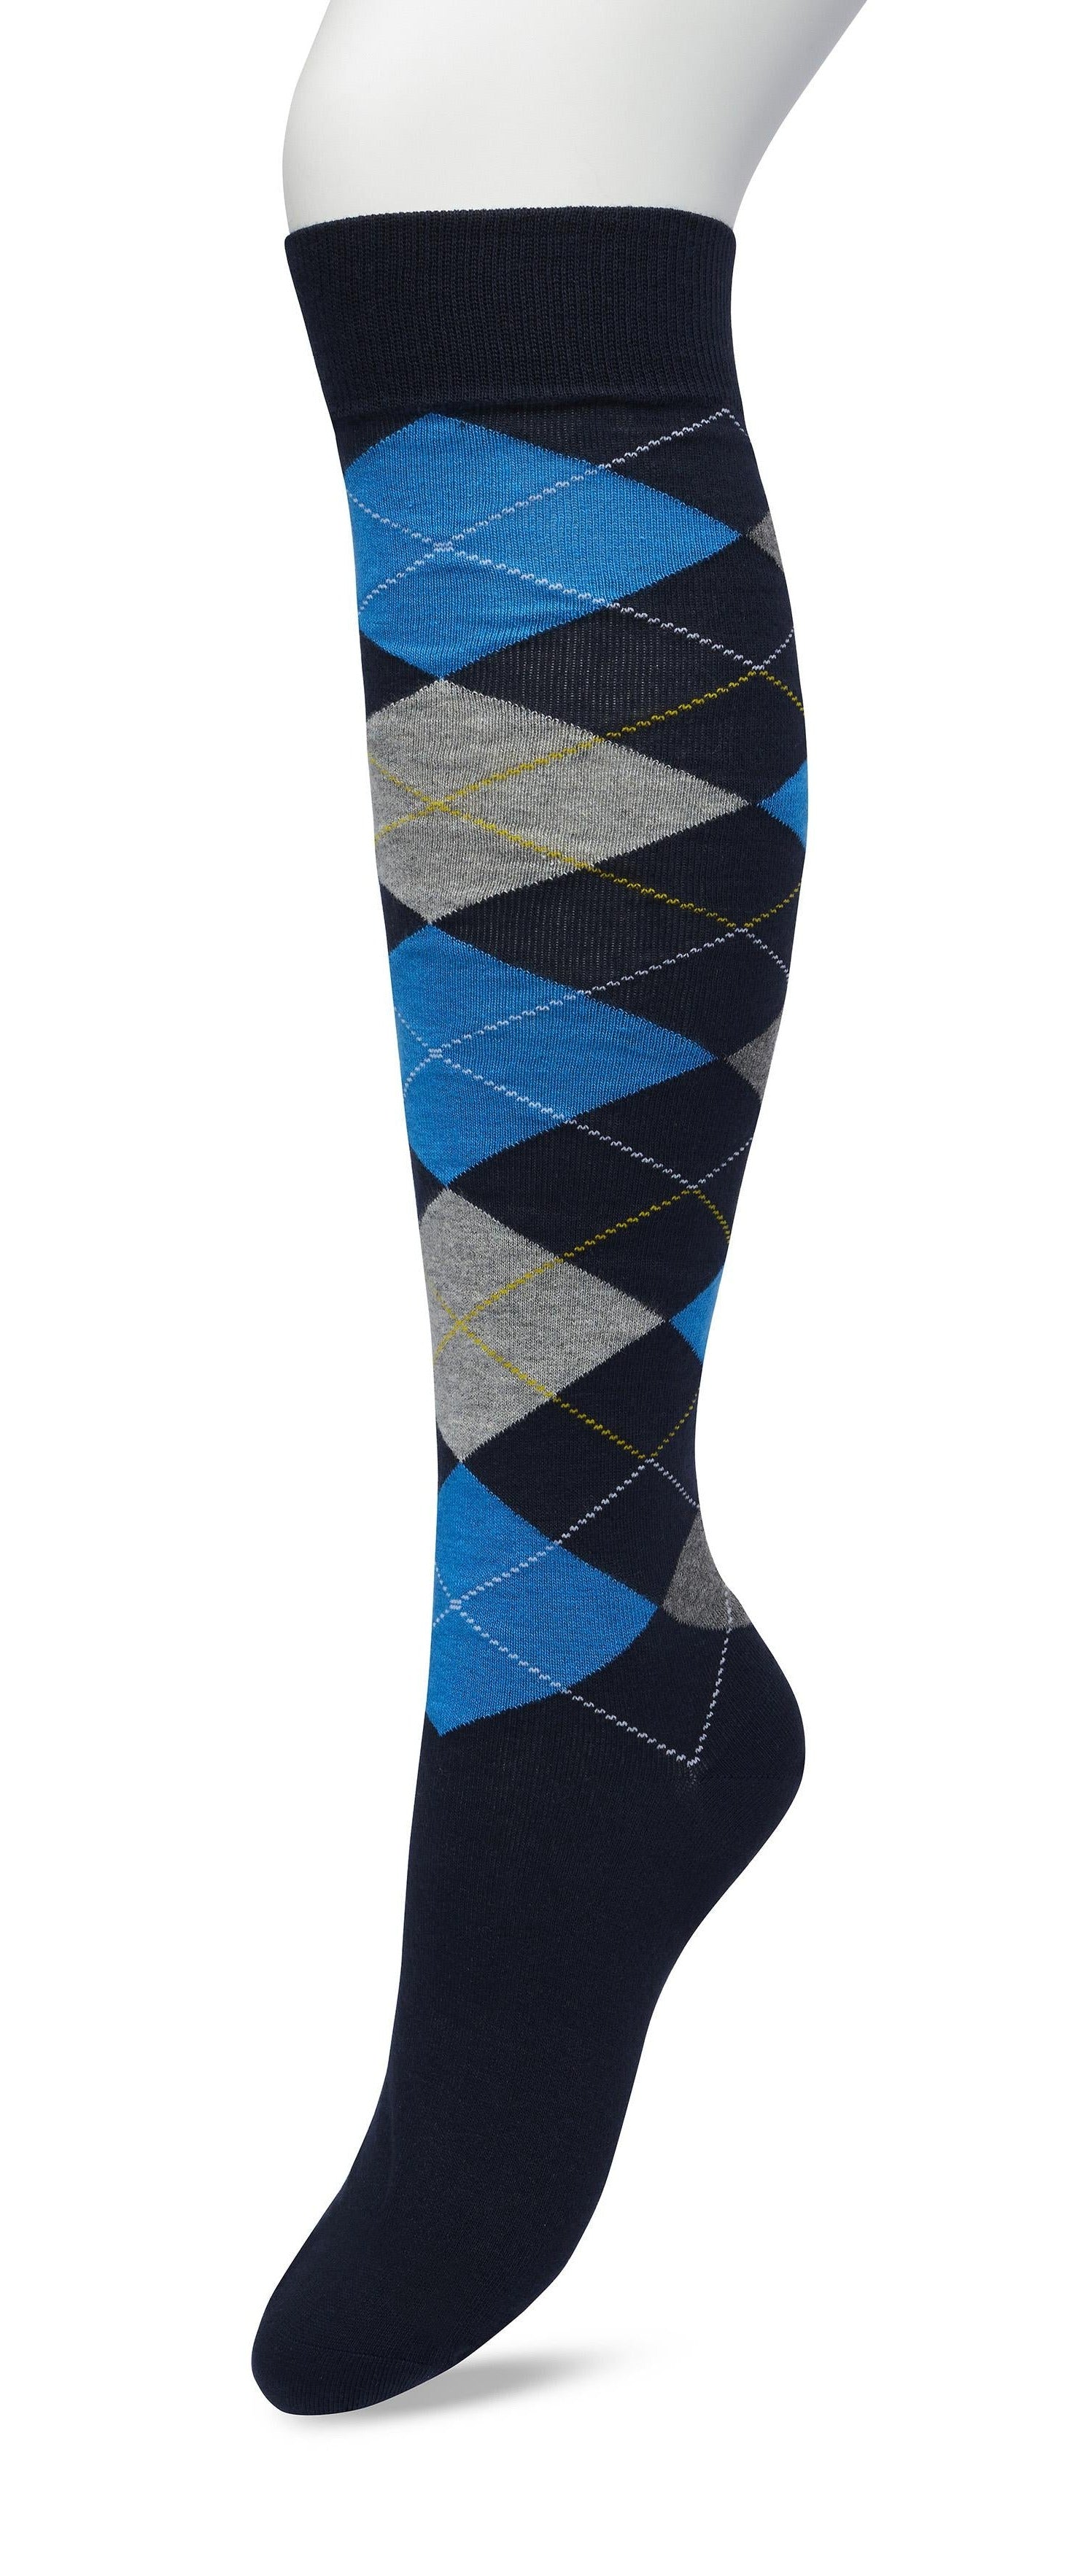 Bonnie Doon BP211505 Argyle Knee-highs - Golf style knee-high socks with a diamond argyle tartan check pattern in bright blue, navy and grey.